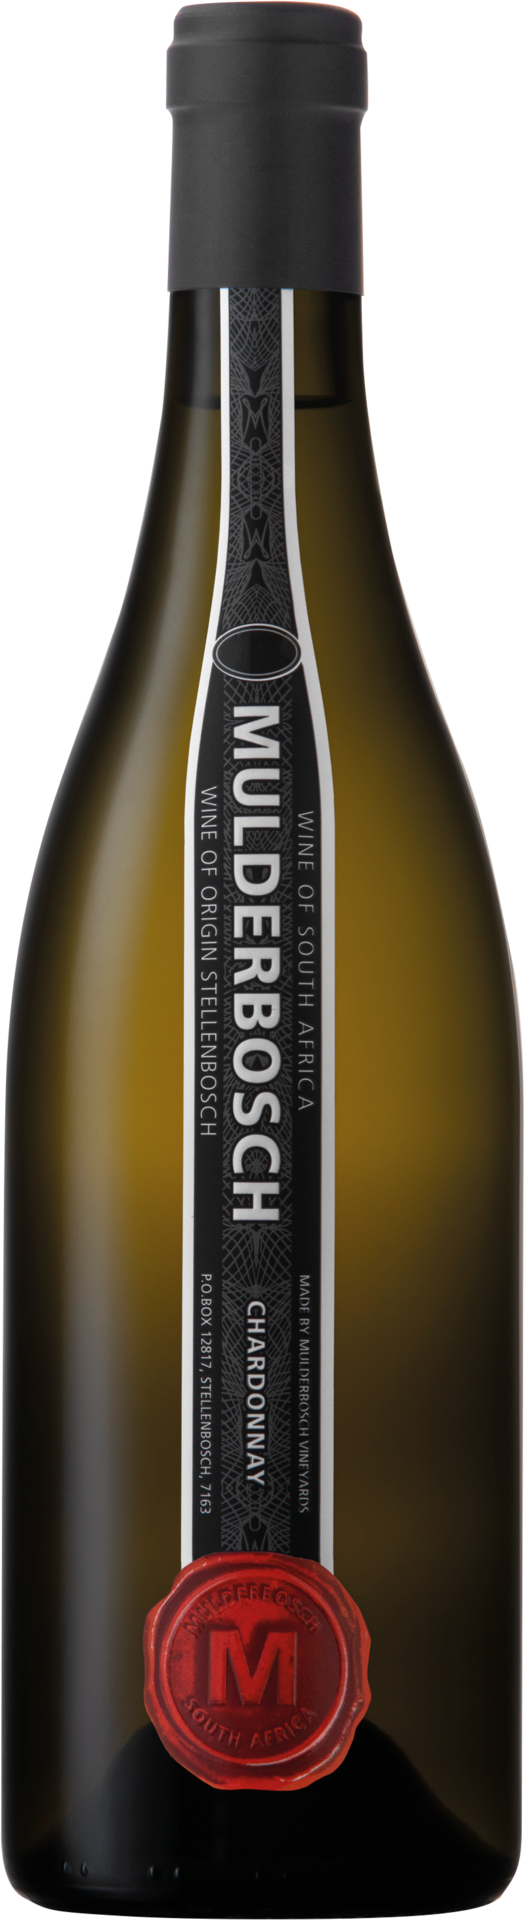 Mulderbosch Chardonnay - 2021